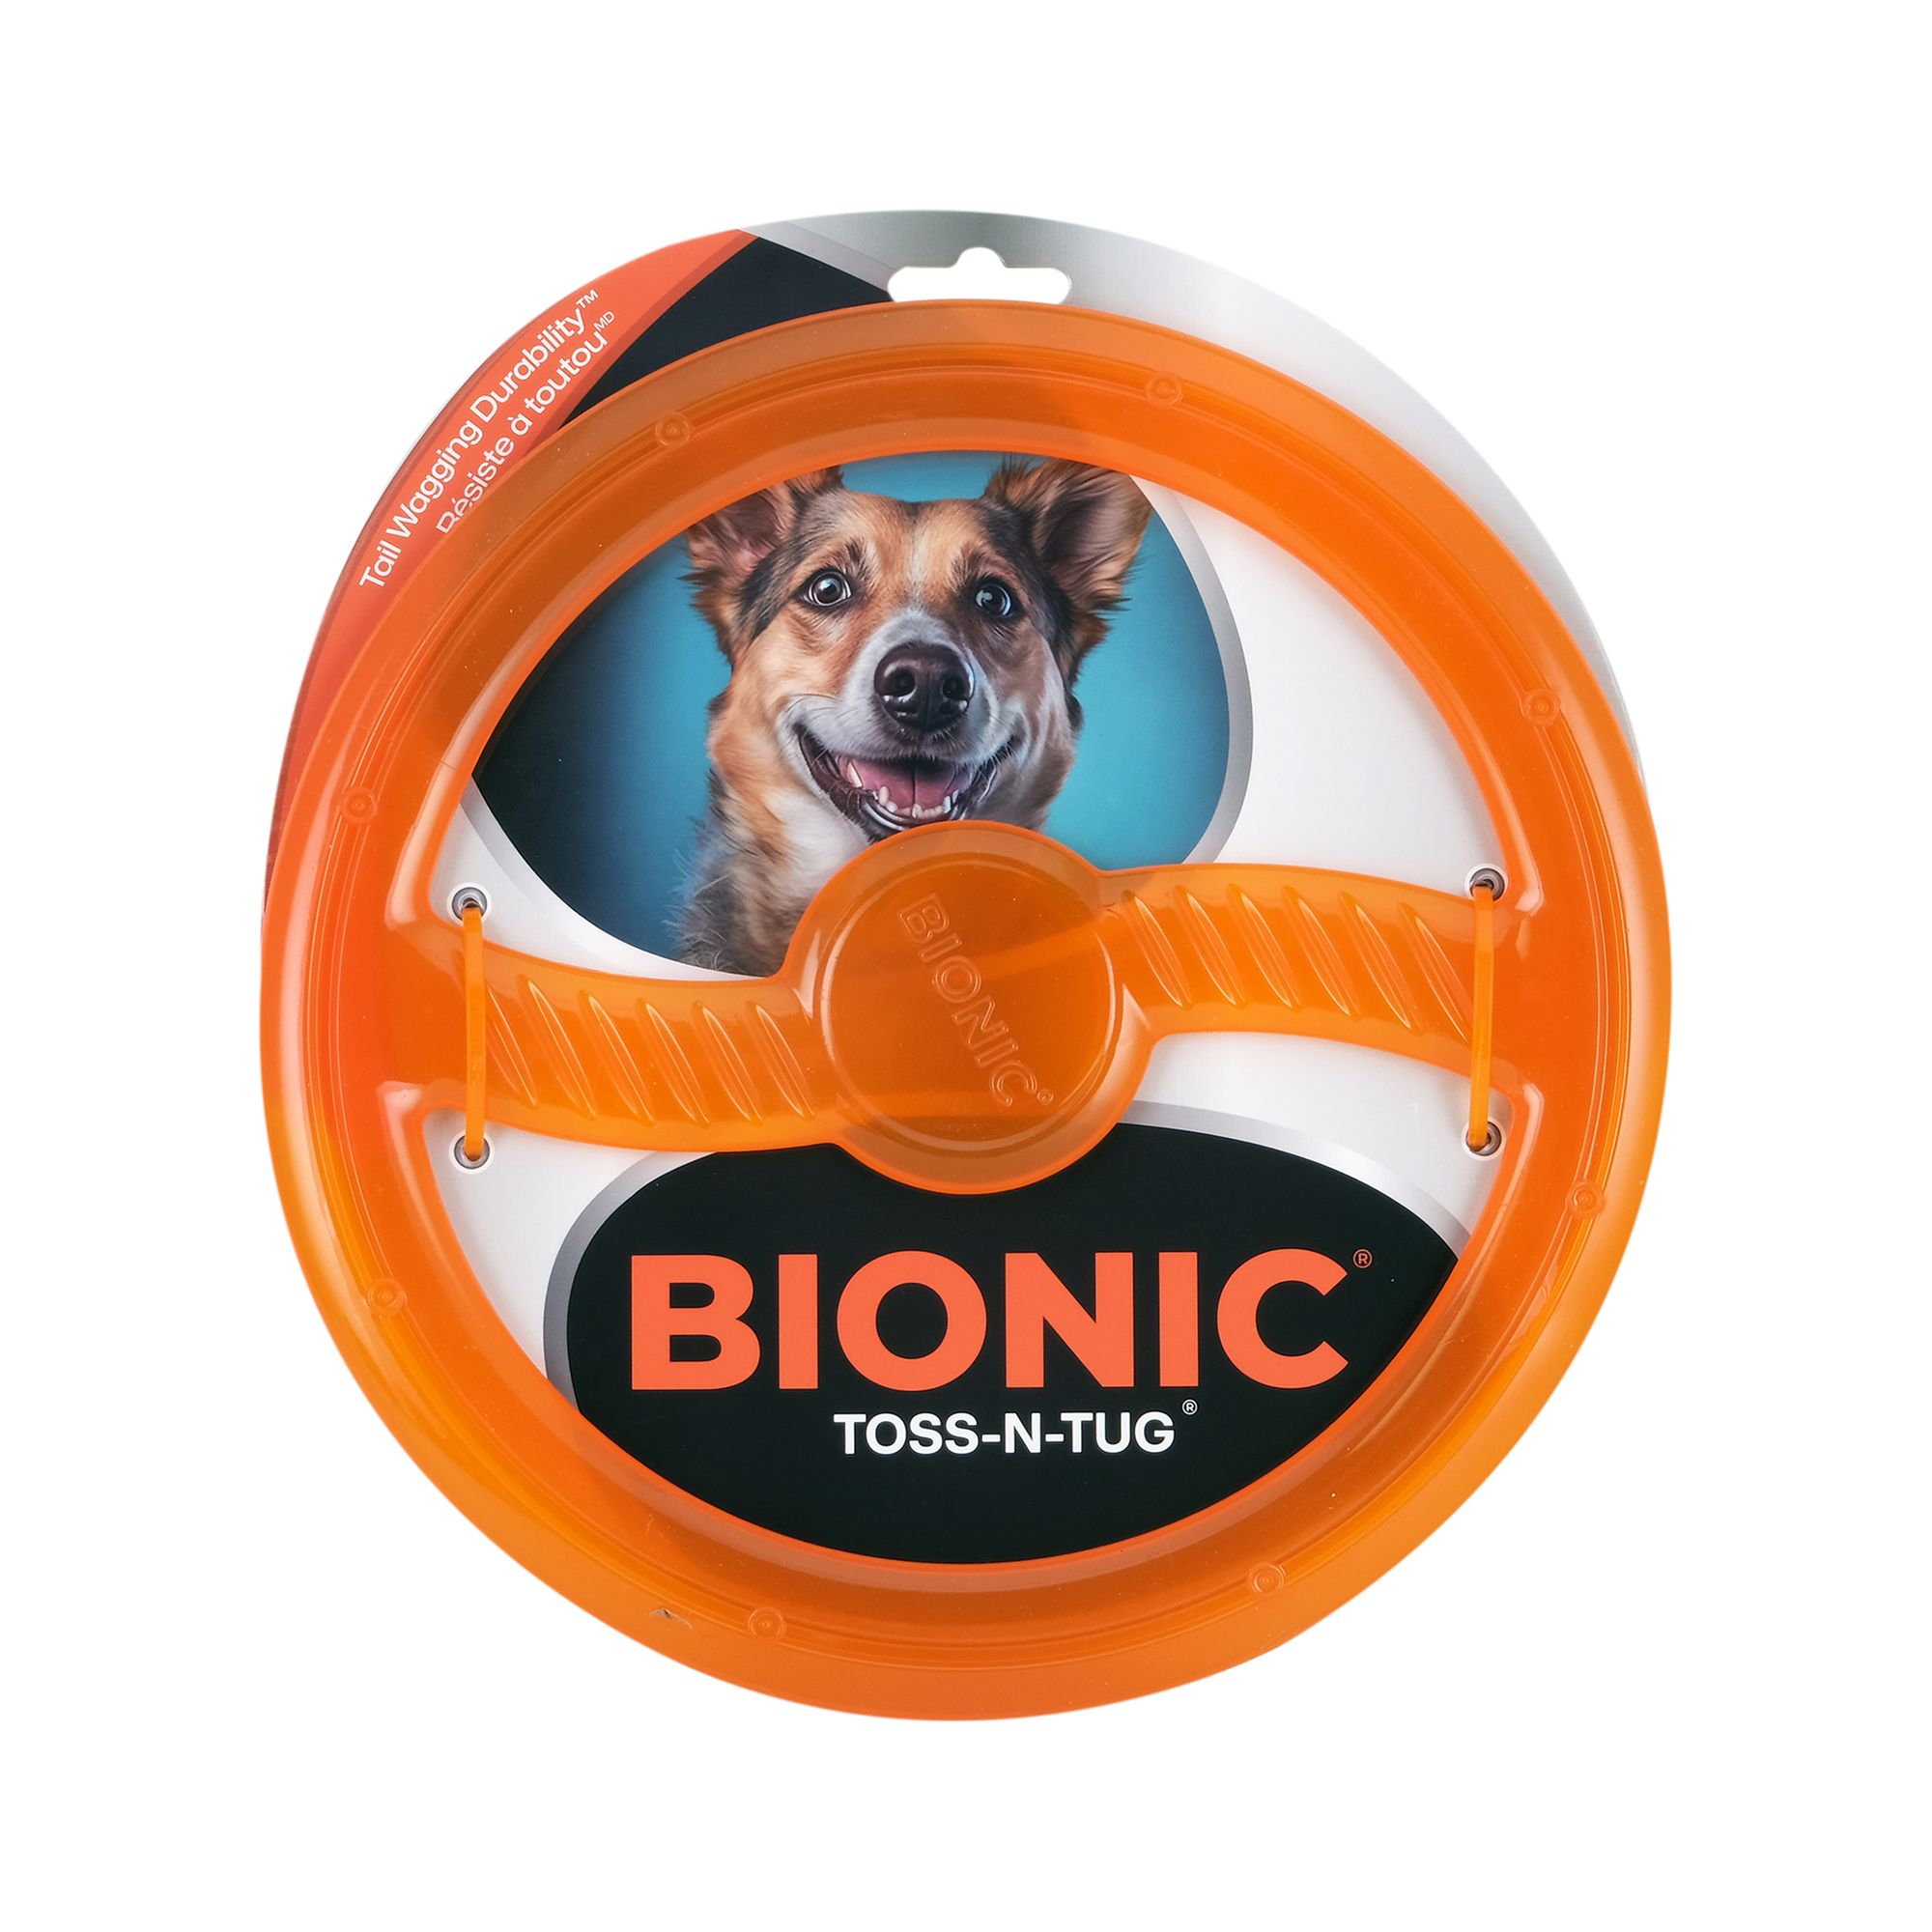 Bionic steering wheel dog toy